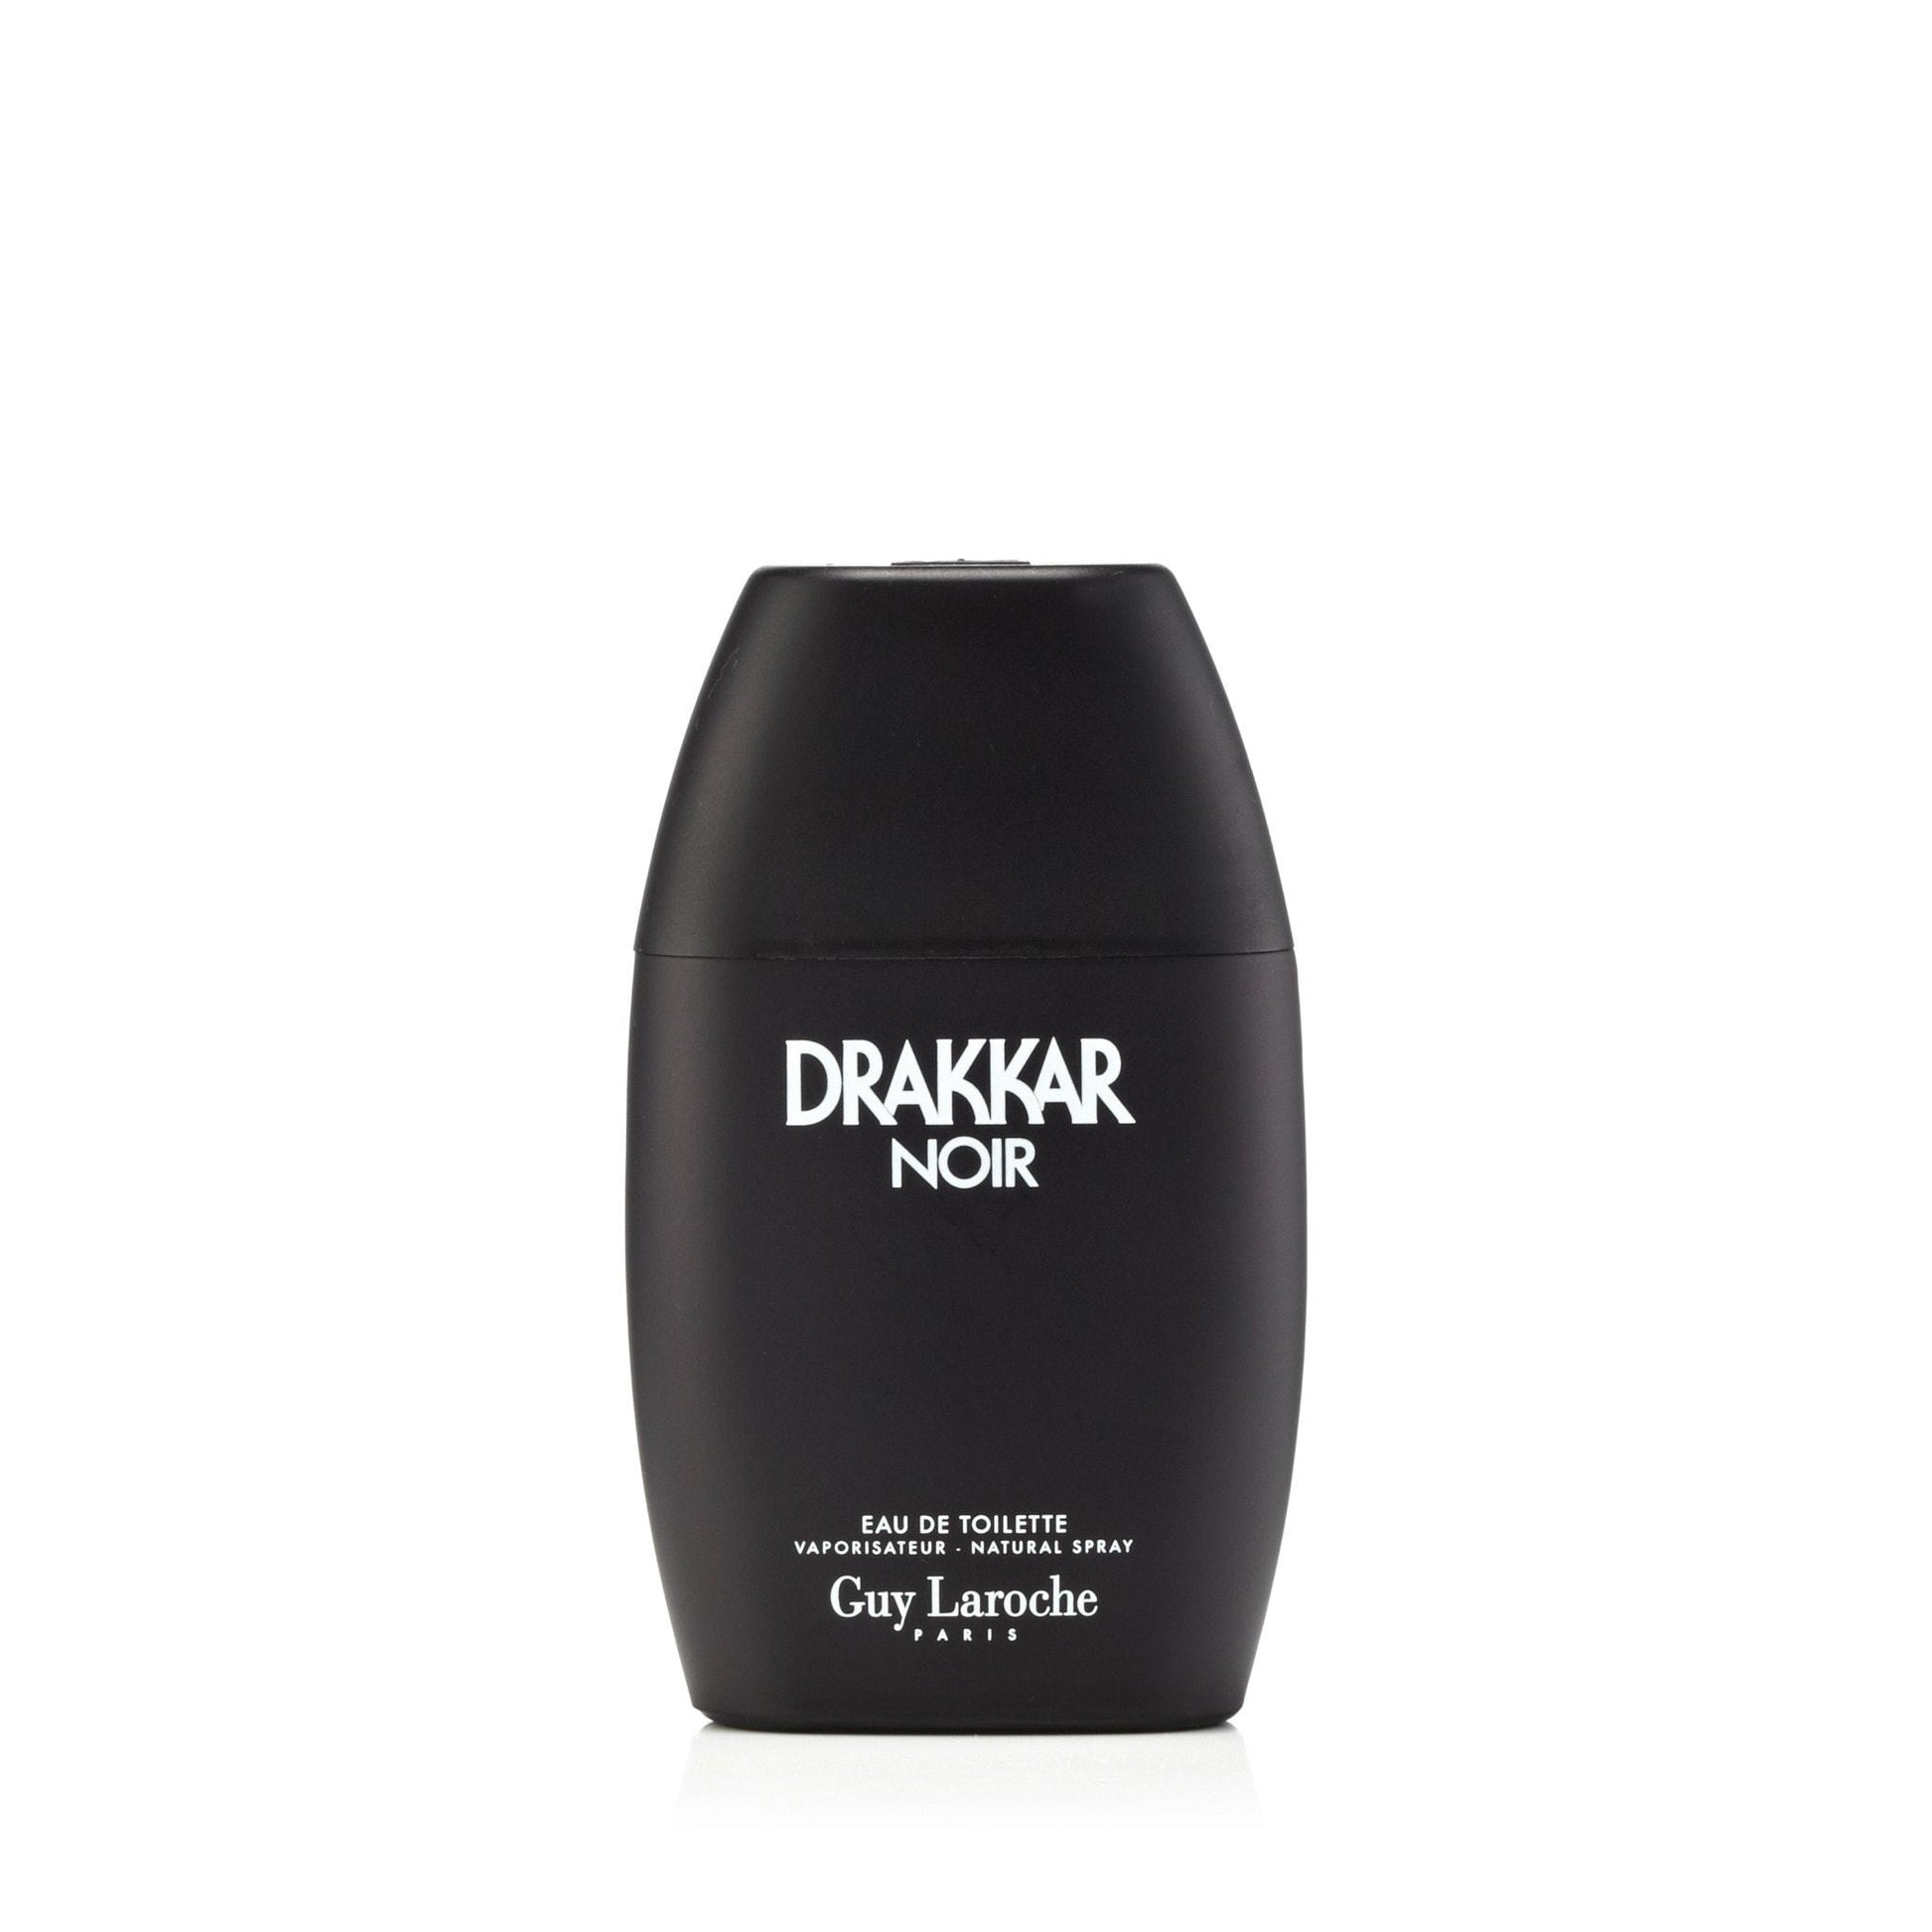 Drakkar Noir Eau de Toilette Spray for Men by Guy Laroche, Product image 4